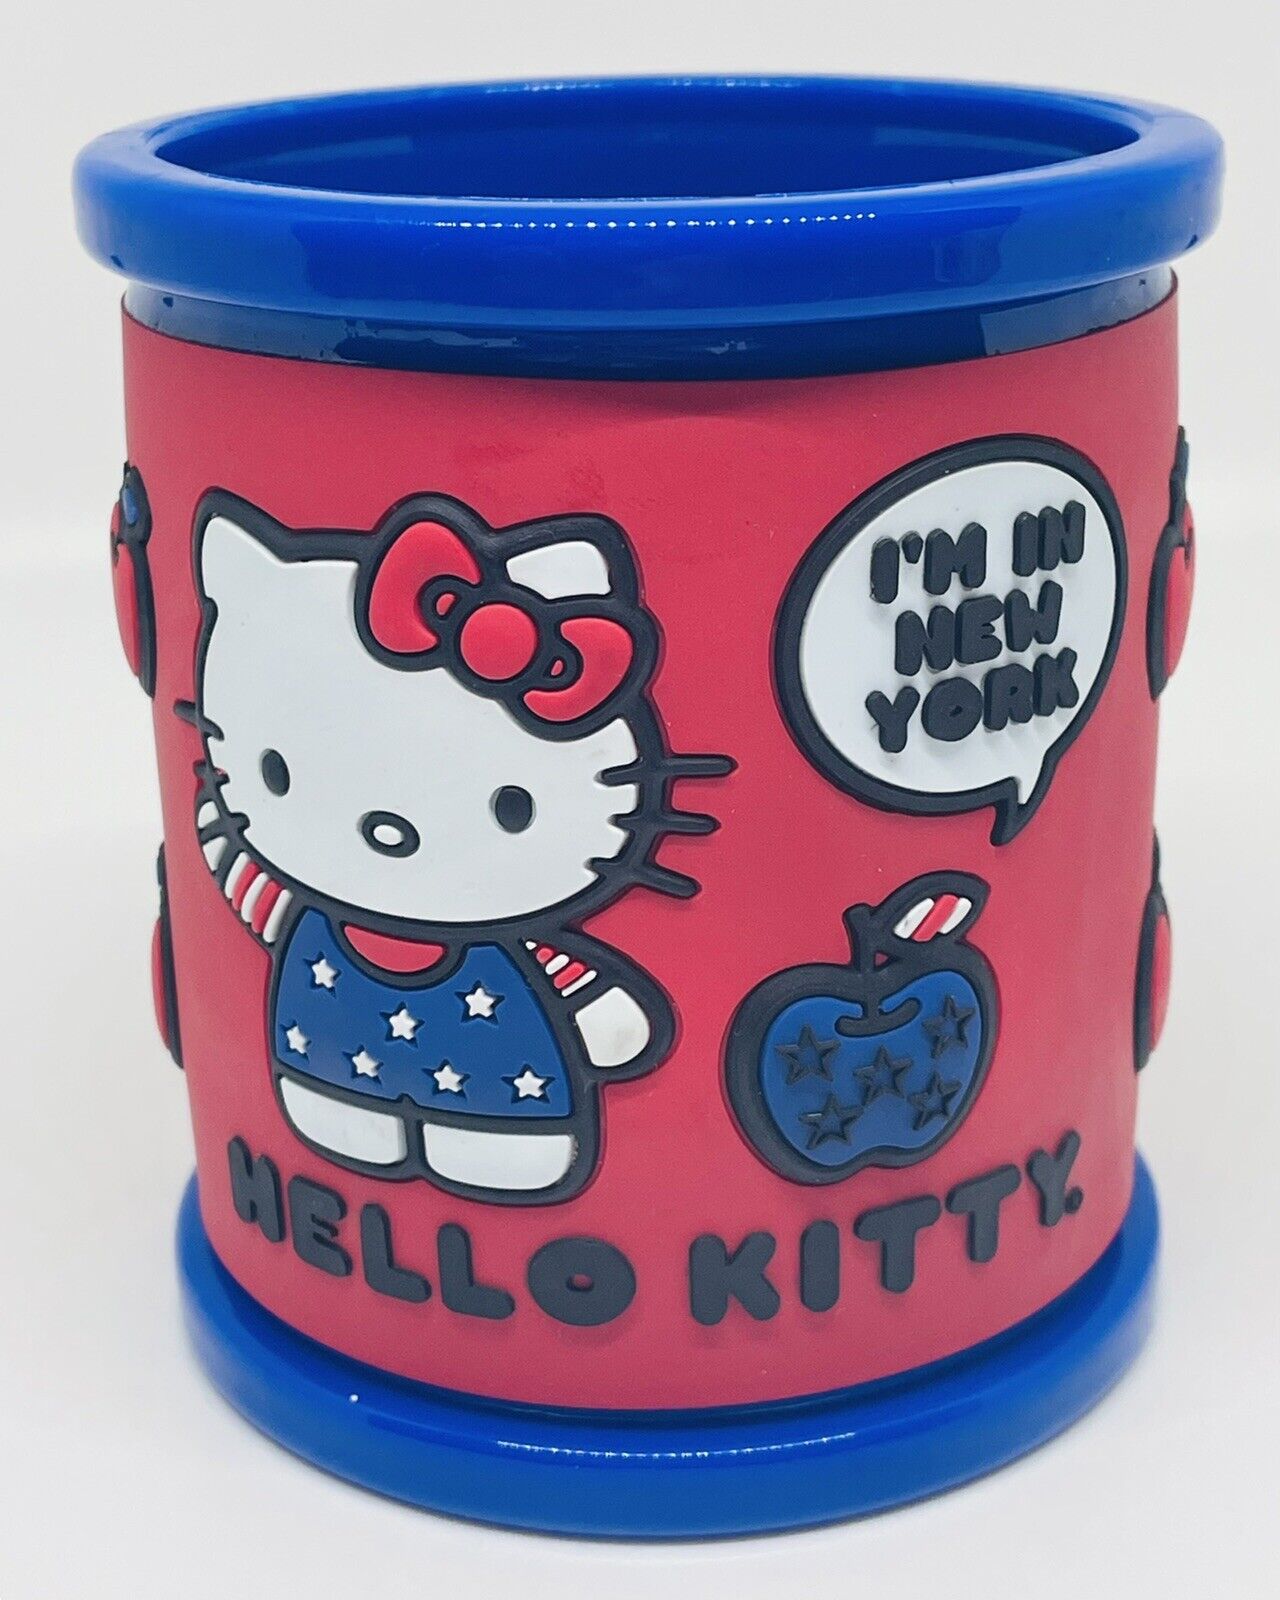 Hello Kitty I’m in New York Child’s Mug Cup 2012 Sanrio